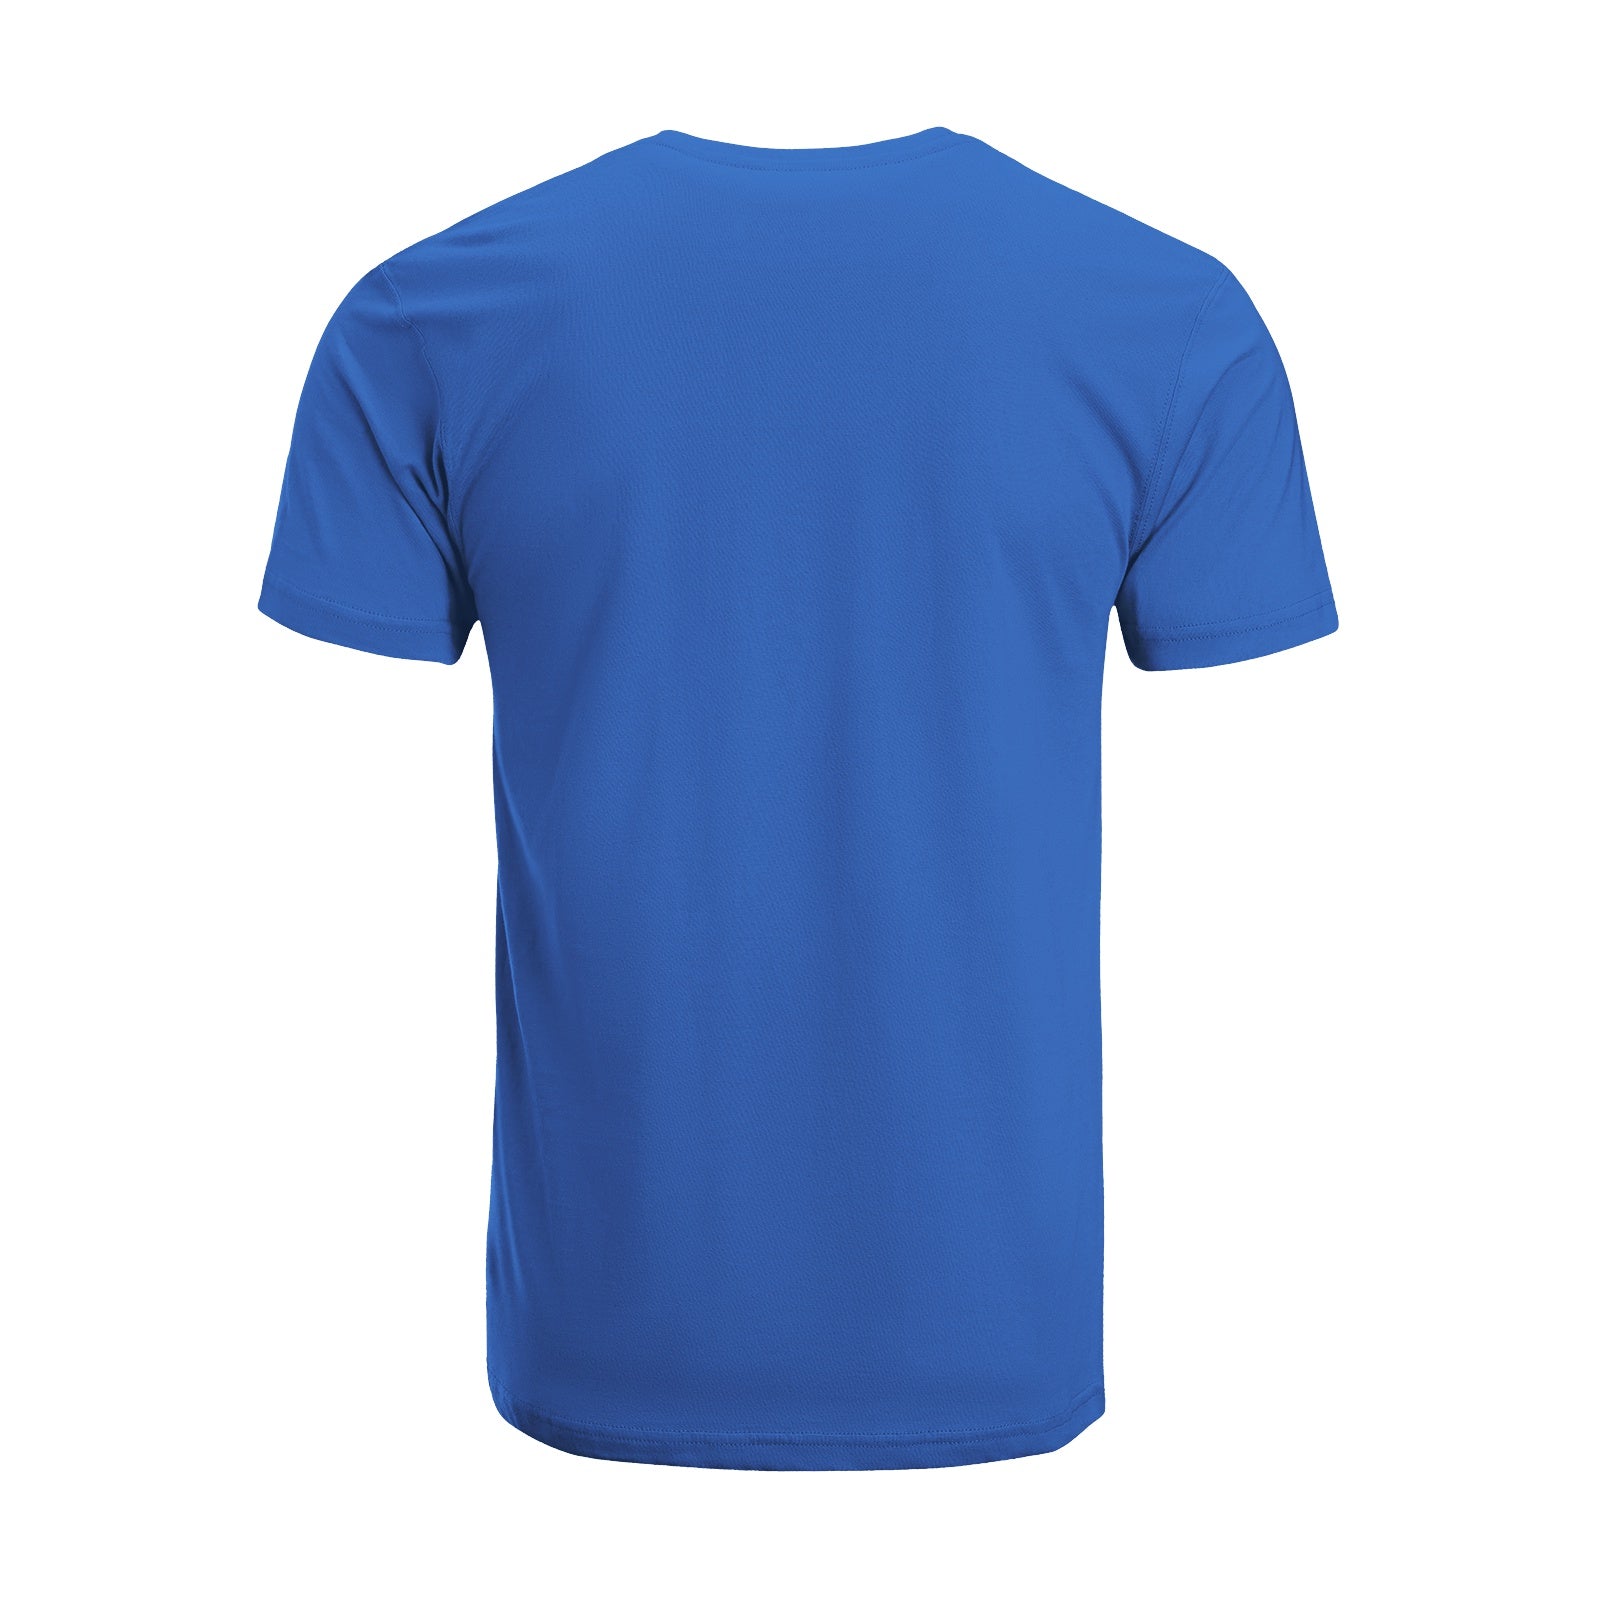 Unisex Short Sleeve Crew Neck Cotton Jersey T-Shirt CAT 34 - Tara-Outfits.com